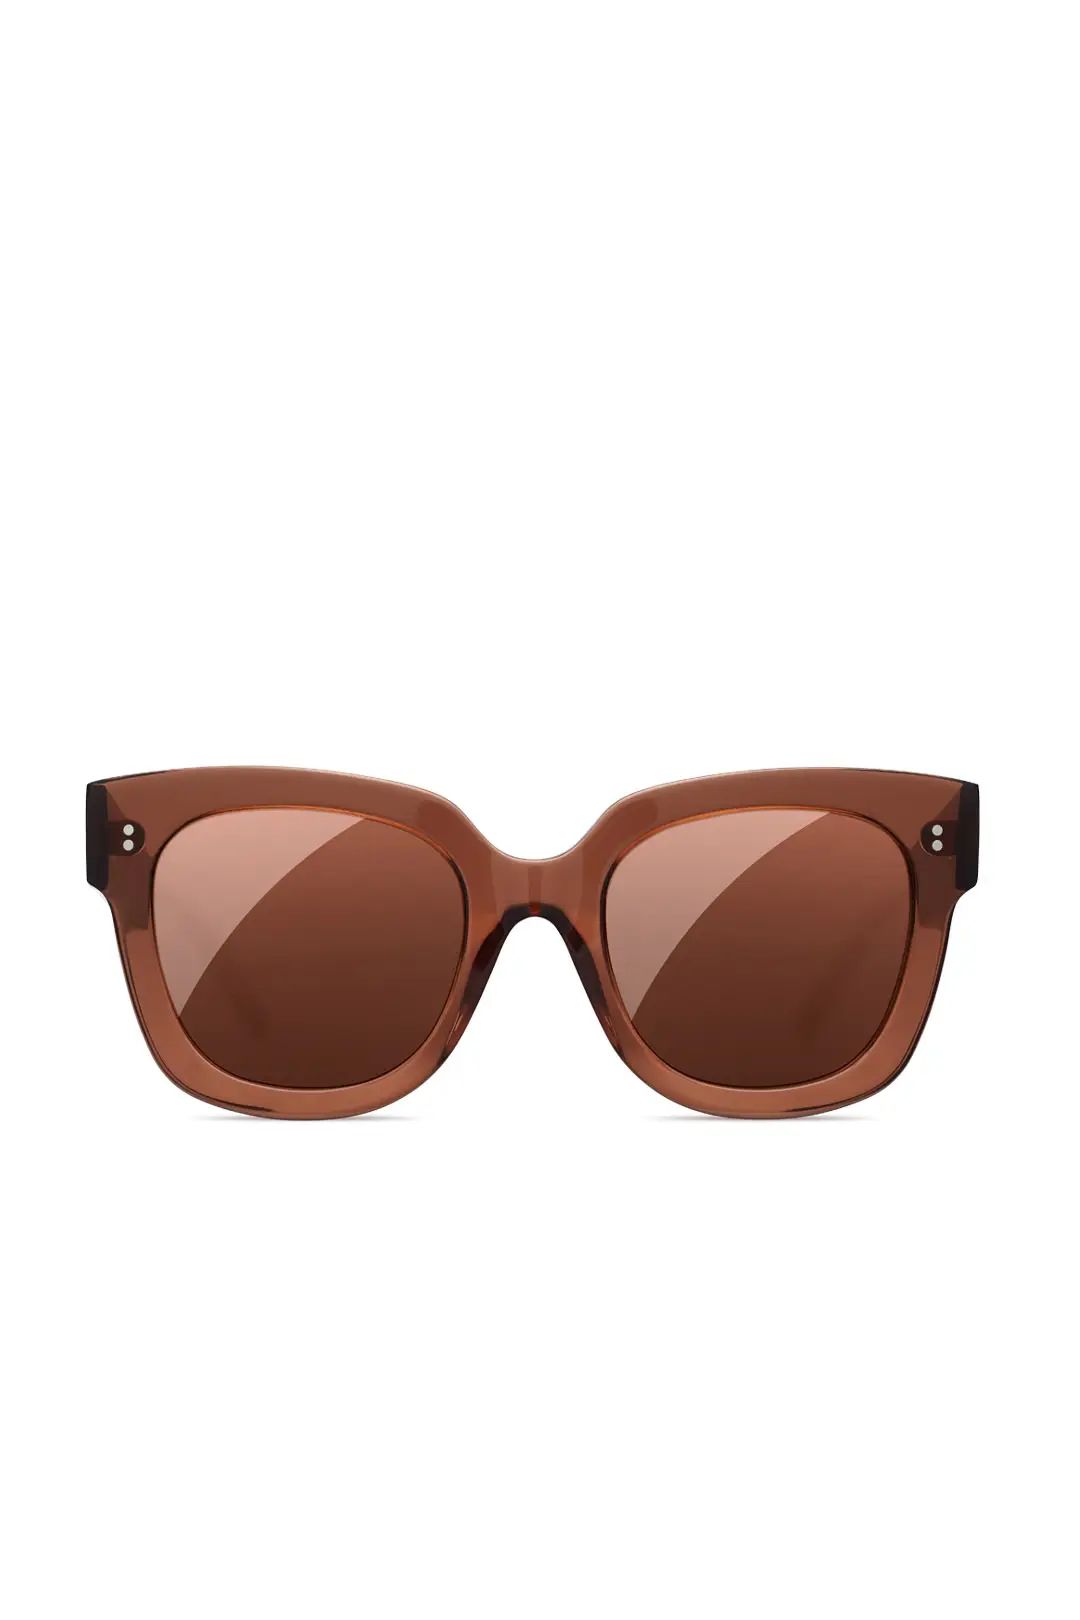 Coco Sunglasses | Rent The Runway